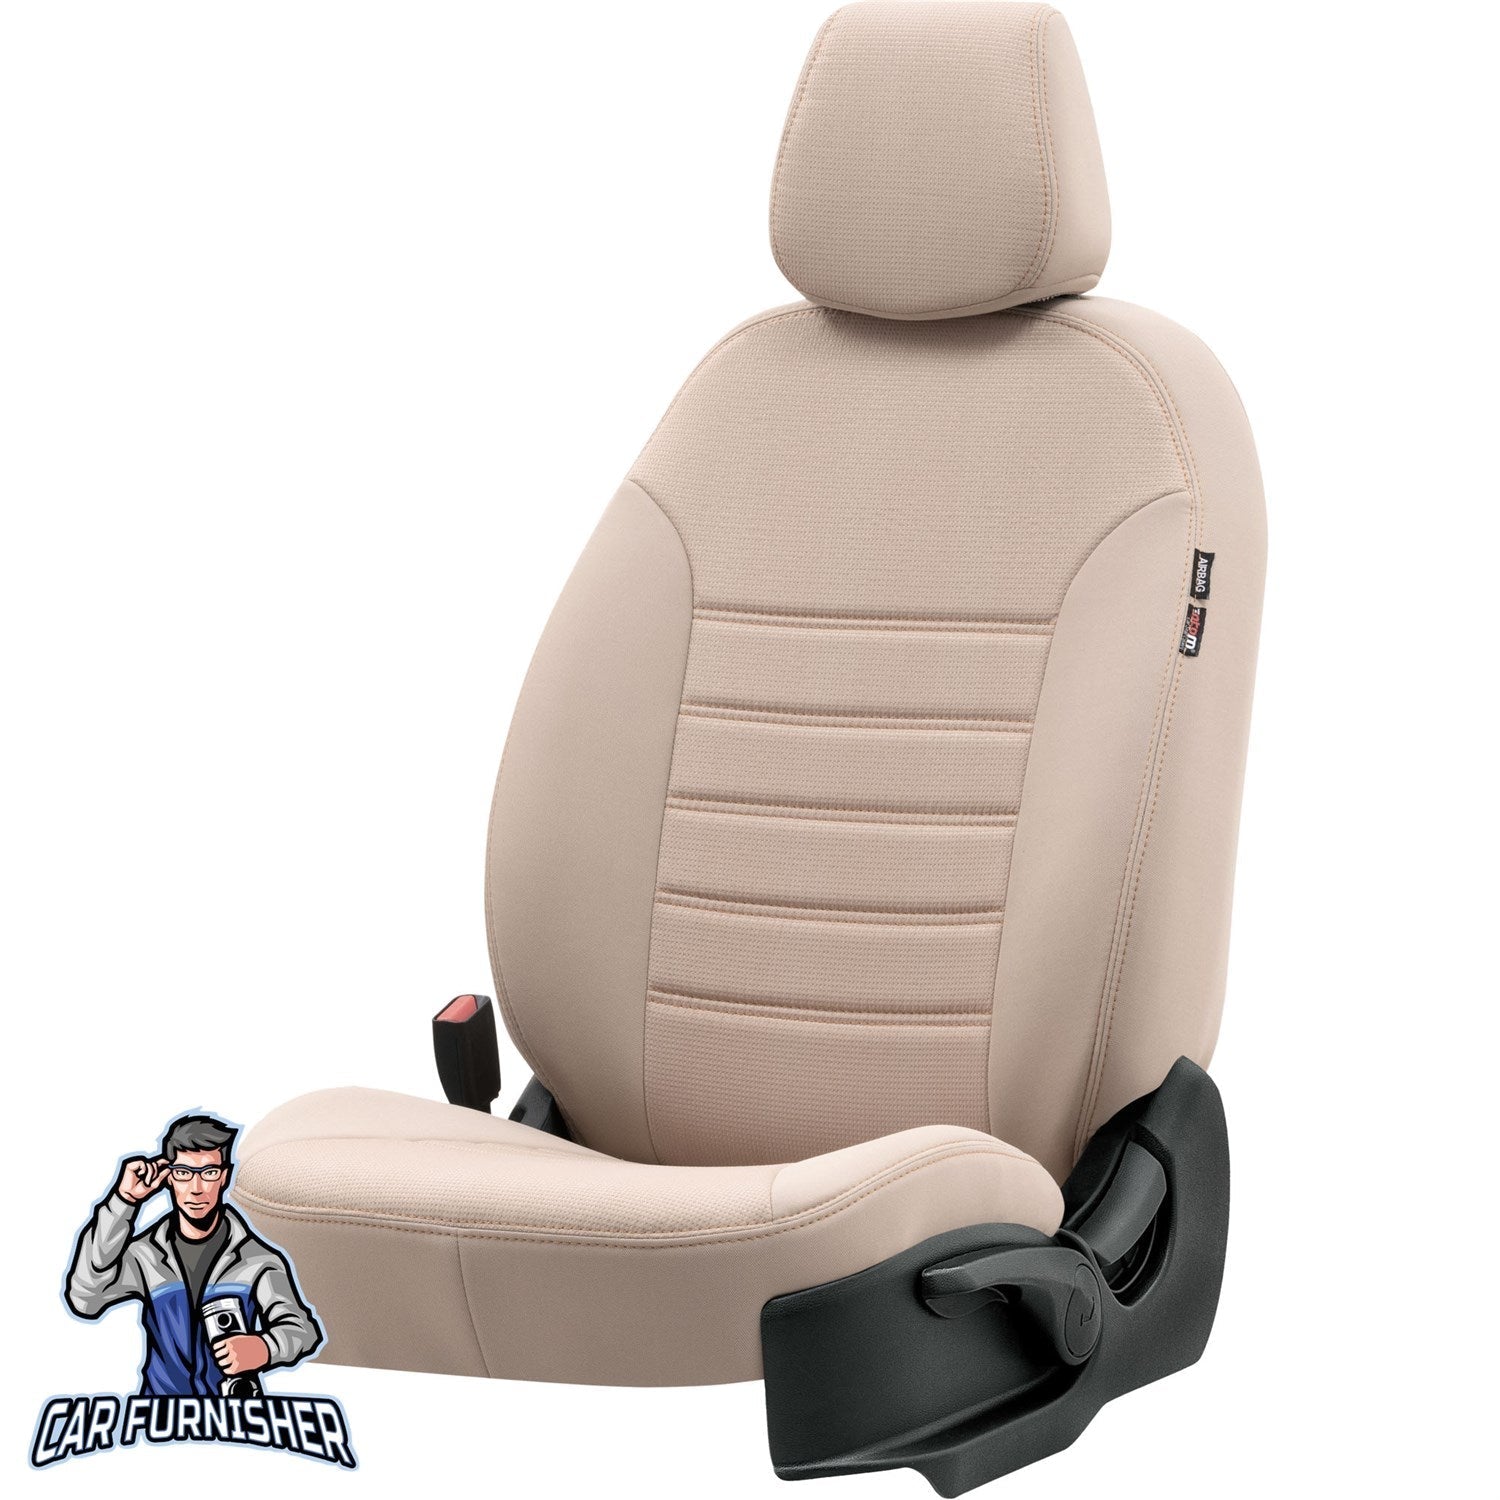 Chery Alia Car Seat Covers 2008-2011 Original Design Beige Full Set (5 Seats + Handrest) Fabric